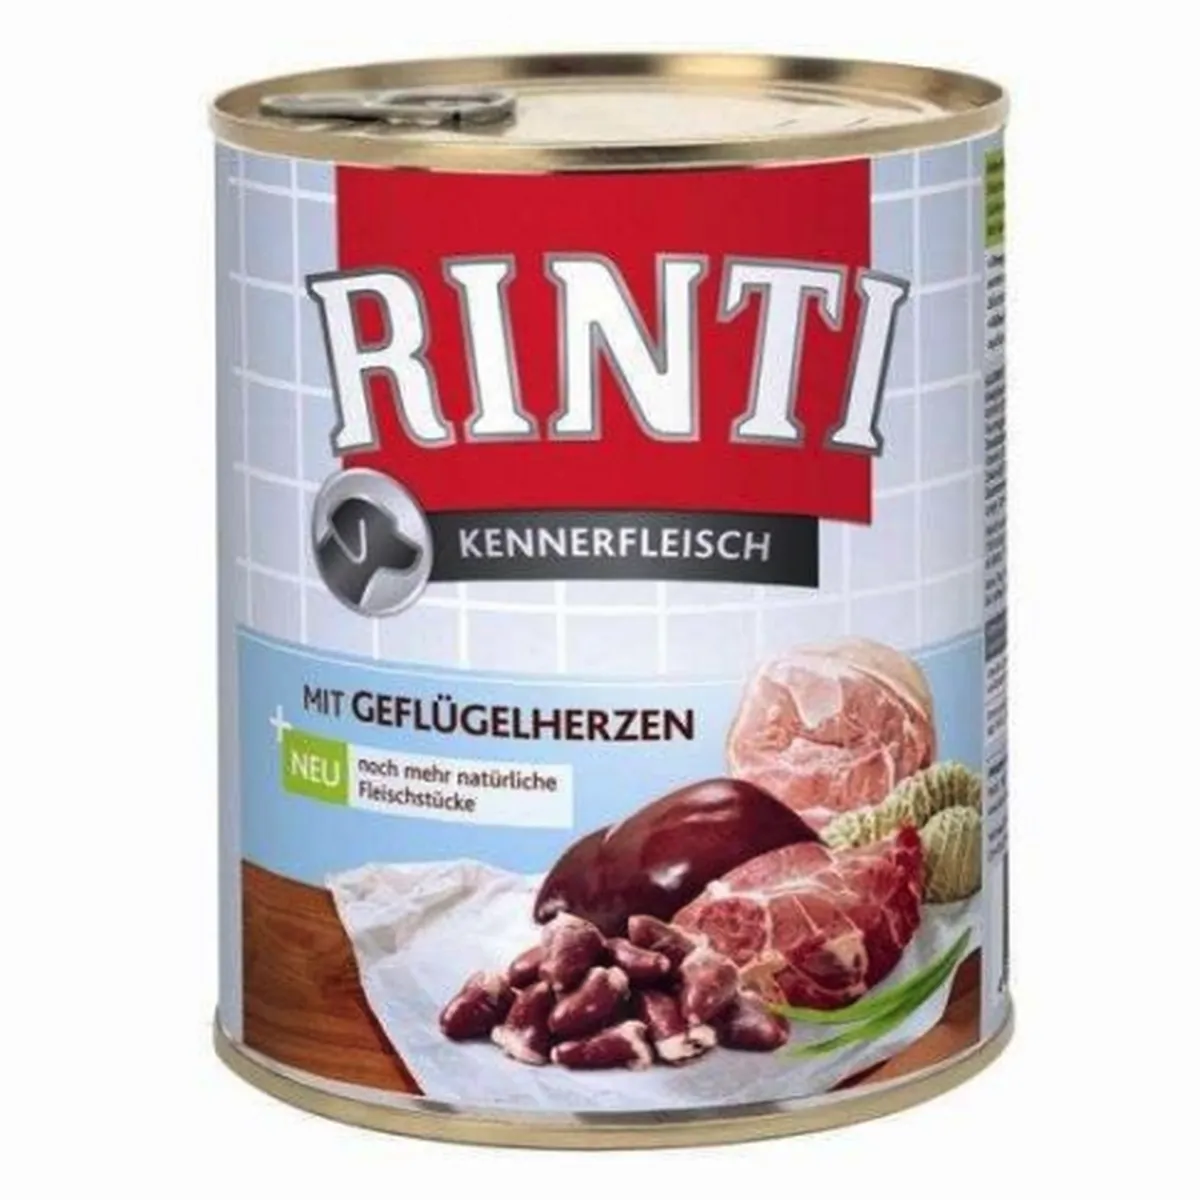 Rinti Kennerfleisch Geflügelherzen – 800 g (12er-Pack)